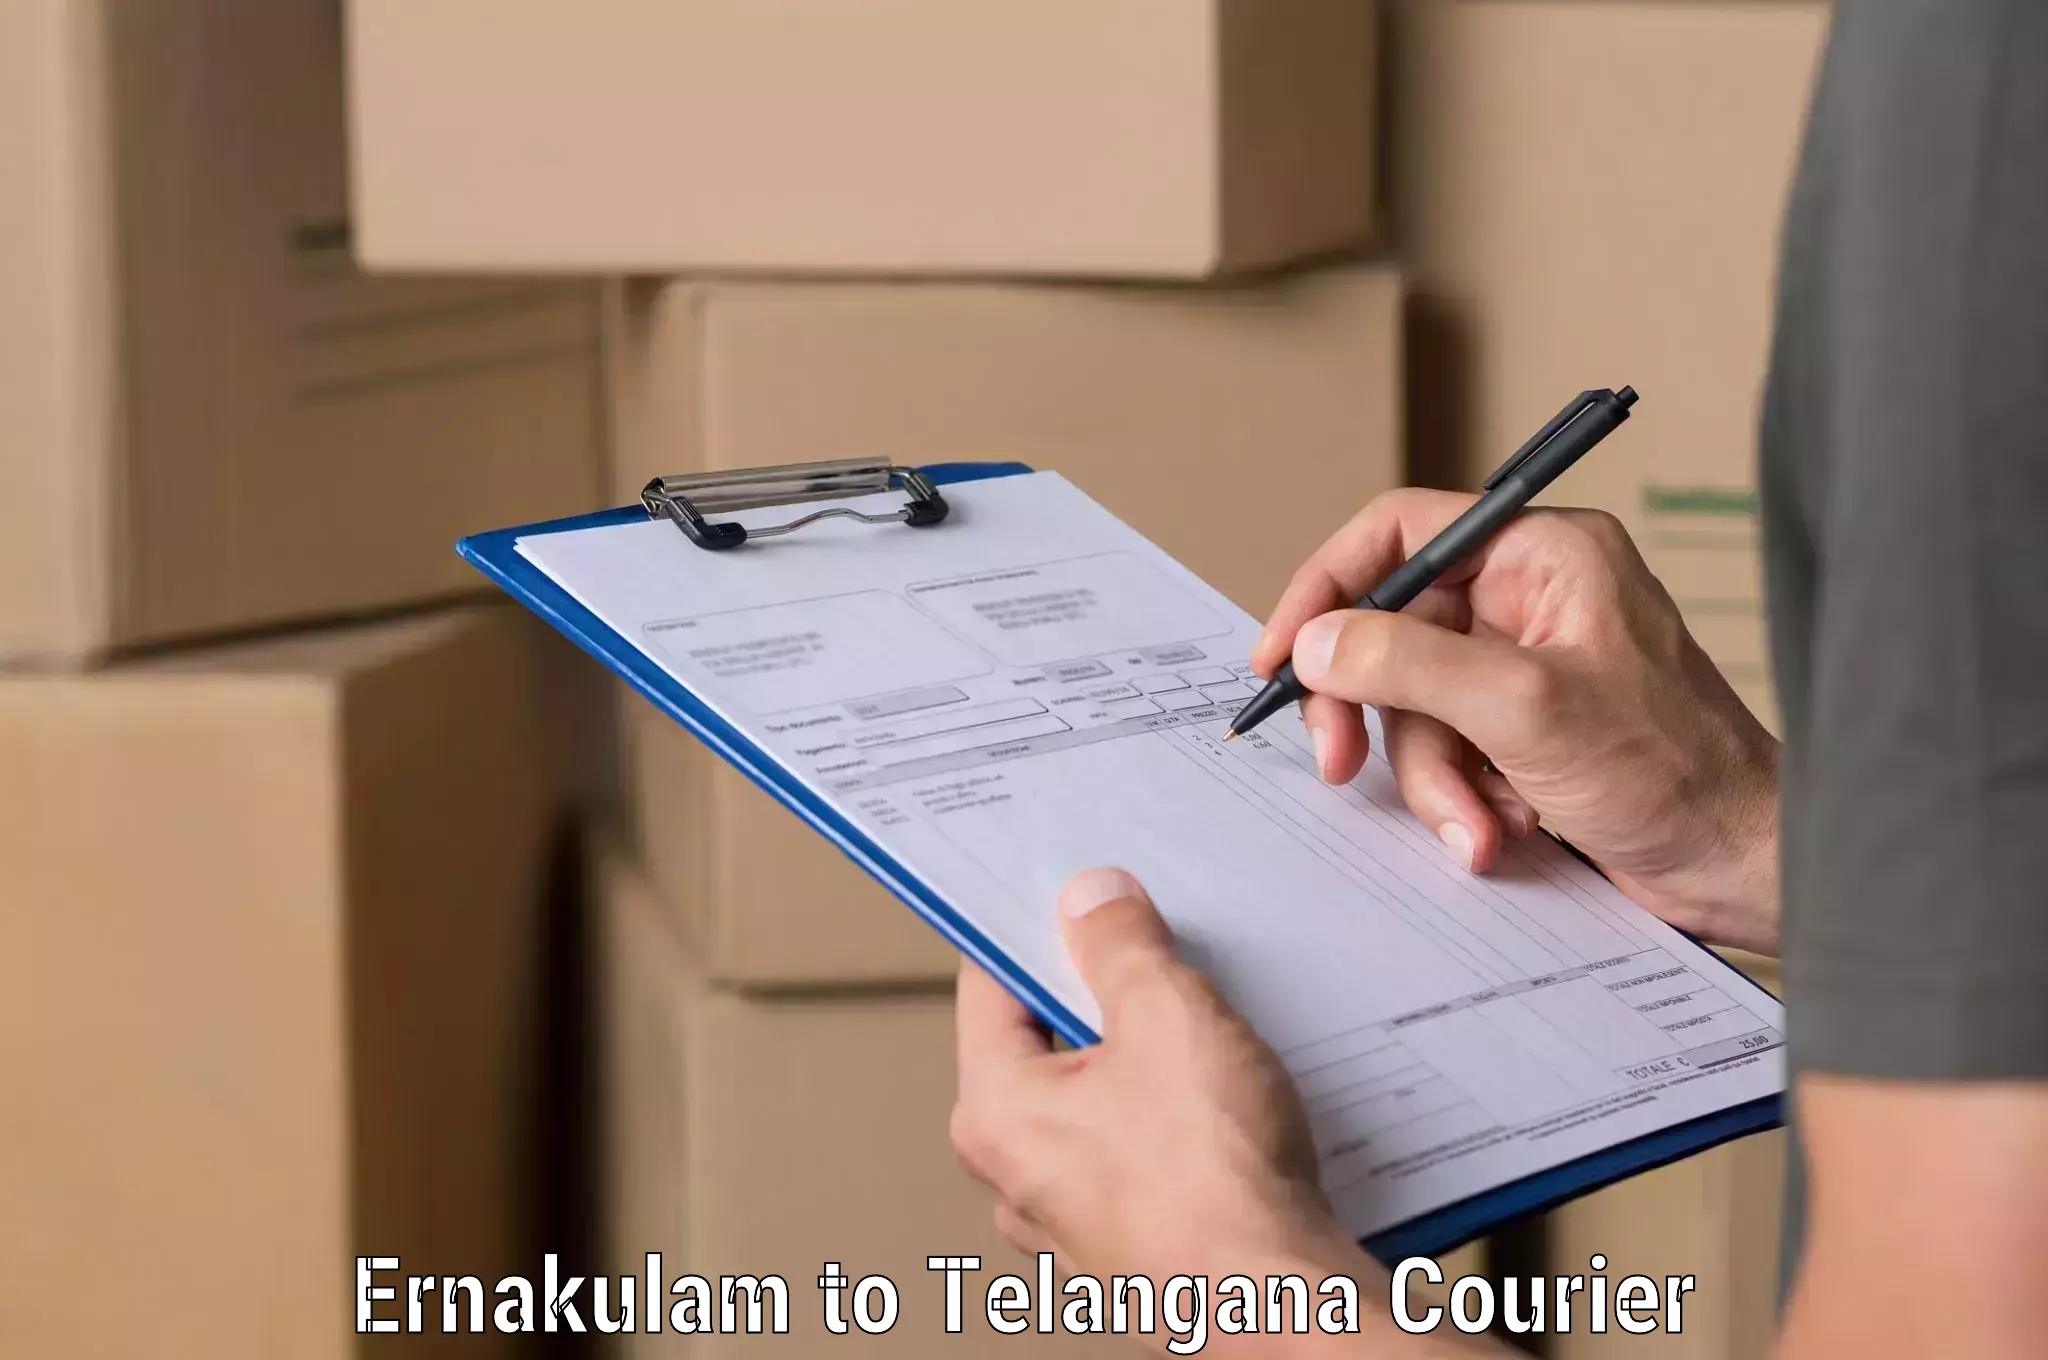 Bulk courier orders Ernakulam to Yellareddy